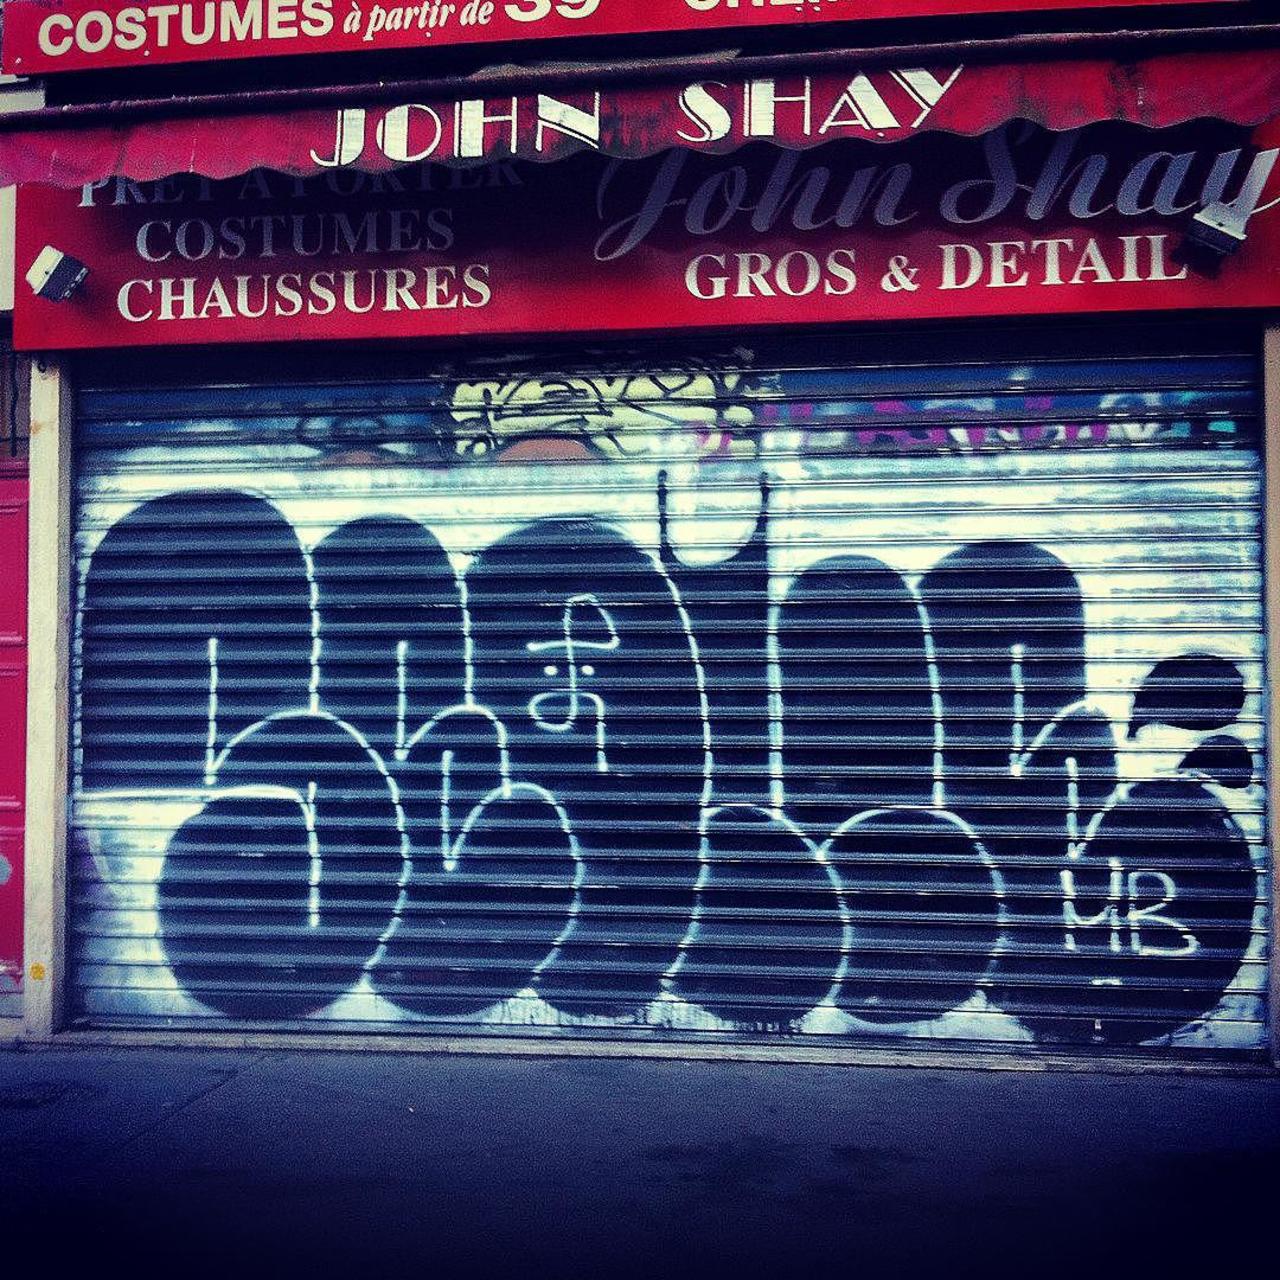 #Paris #graffiti photo by @anne__sofy http://ift.tt/1KWishR #StreetArt http://t.co/7fAu2xGa4p